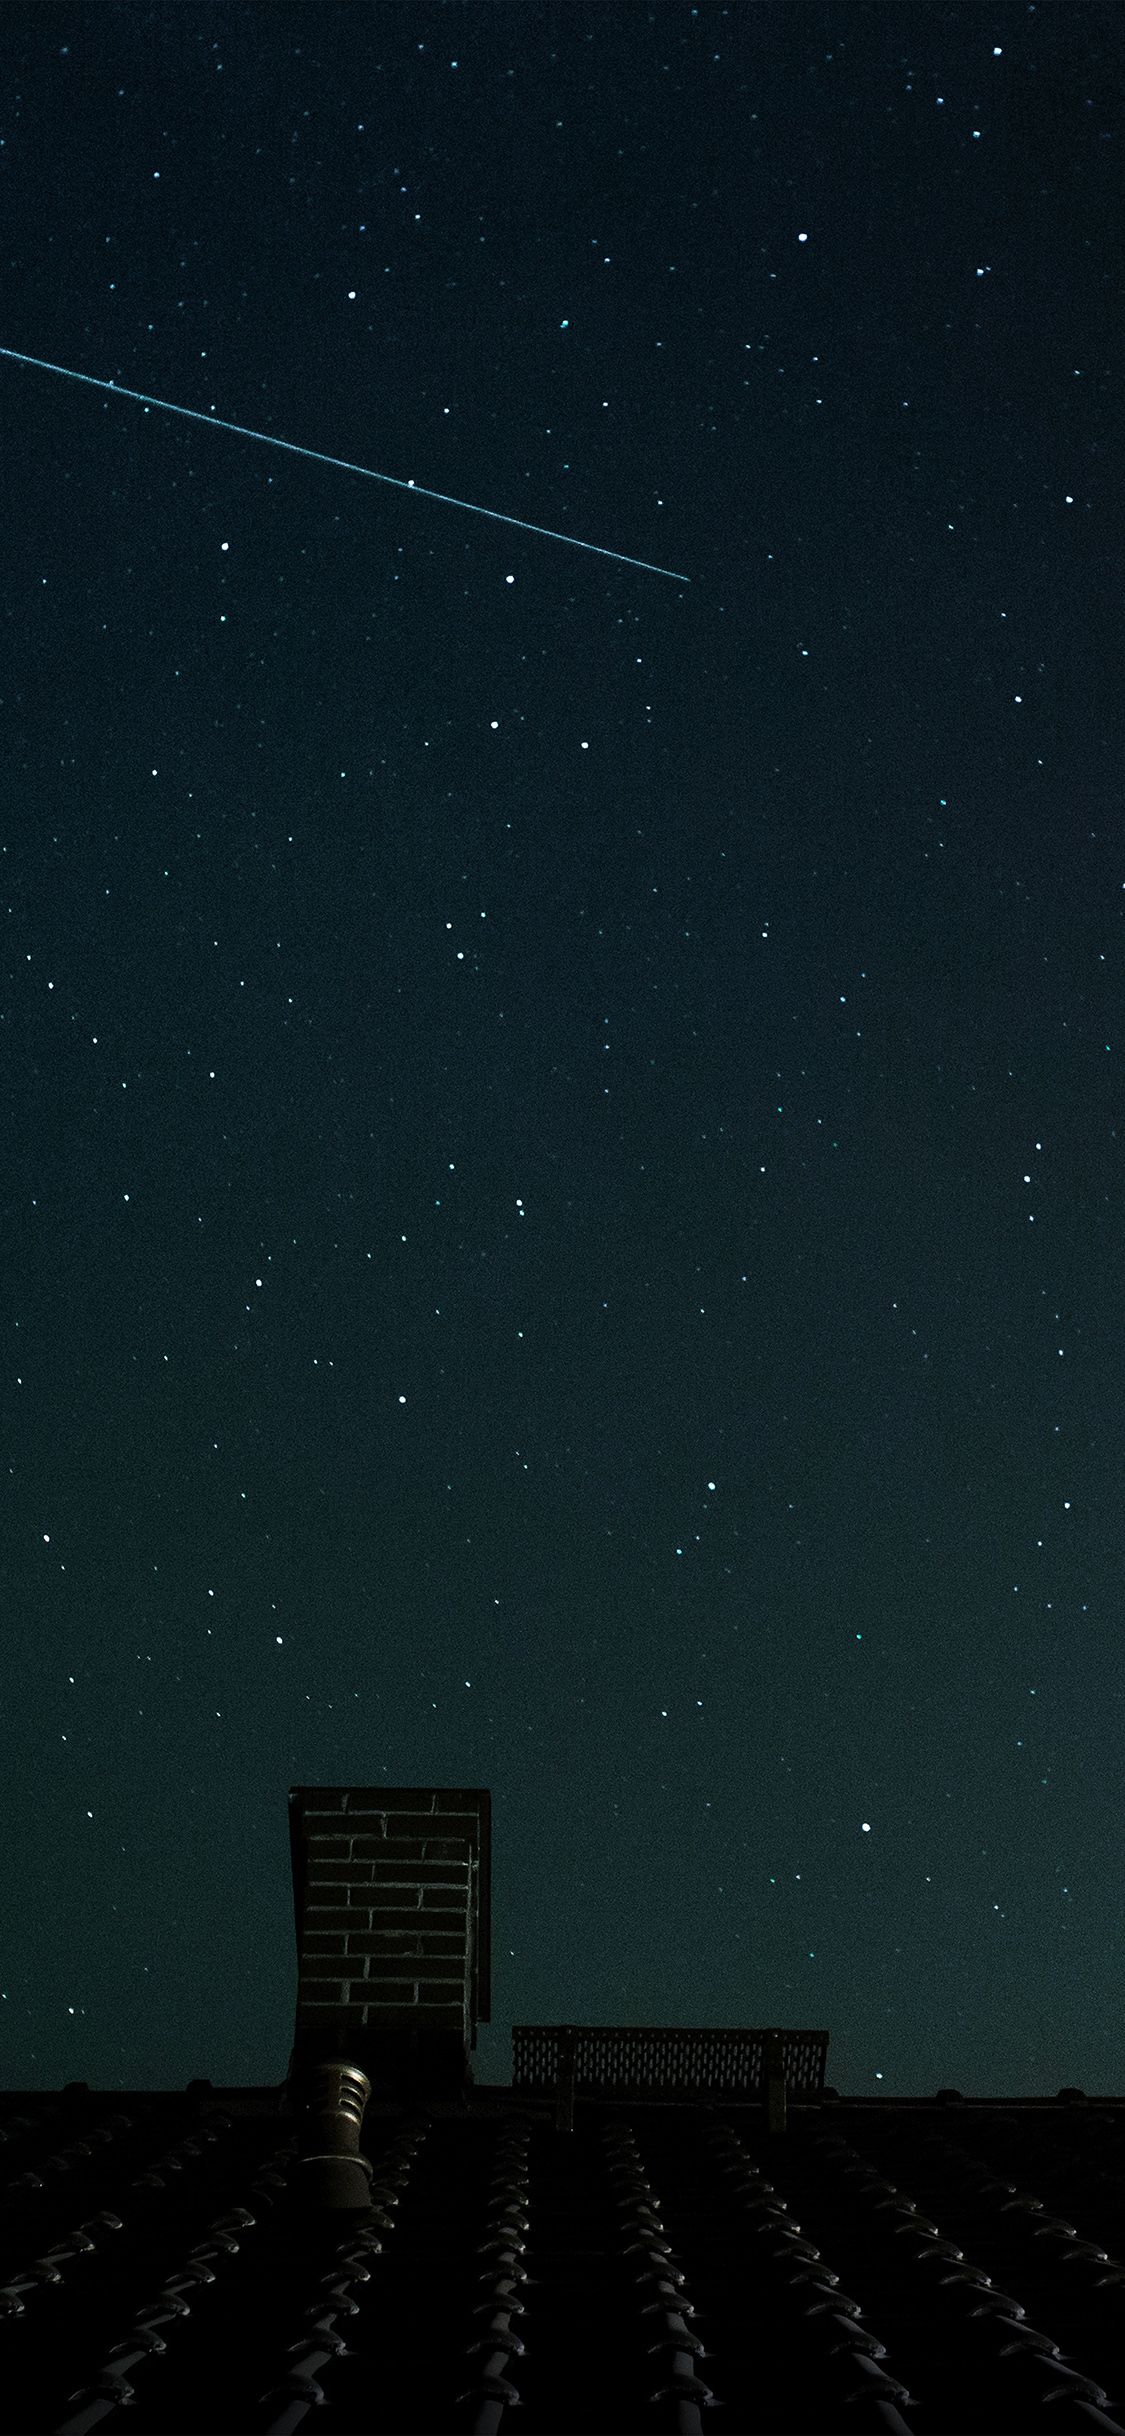 iPhone X wallpaper. star night sky summer dark